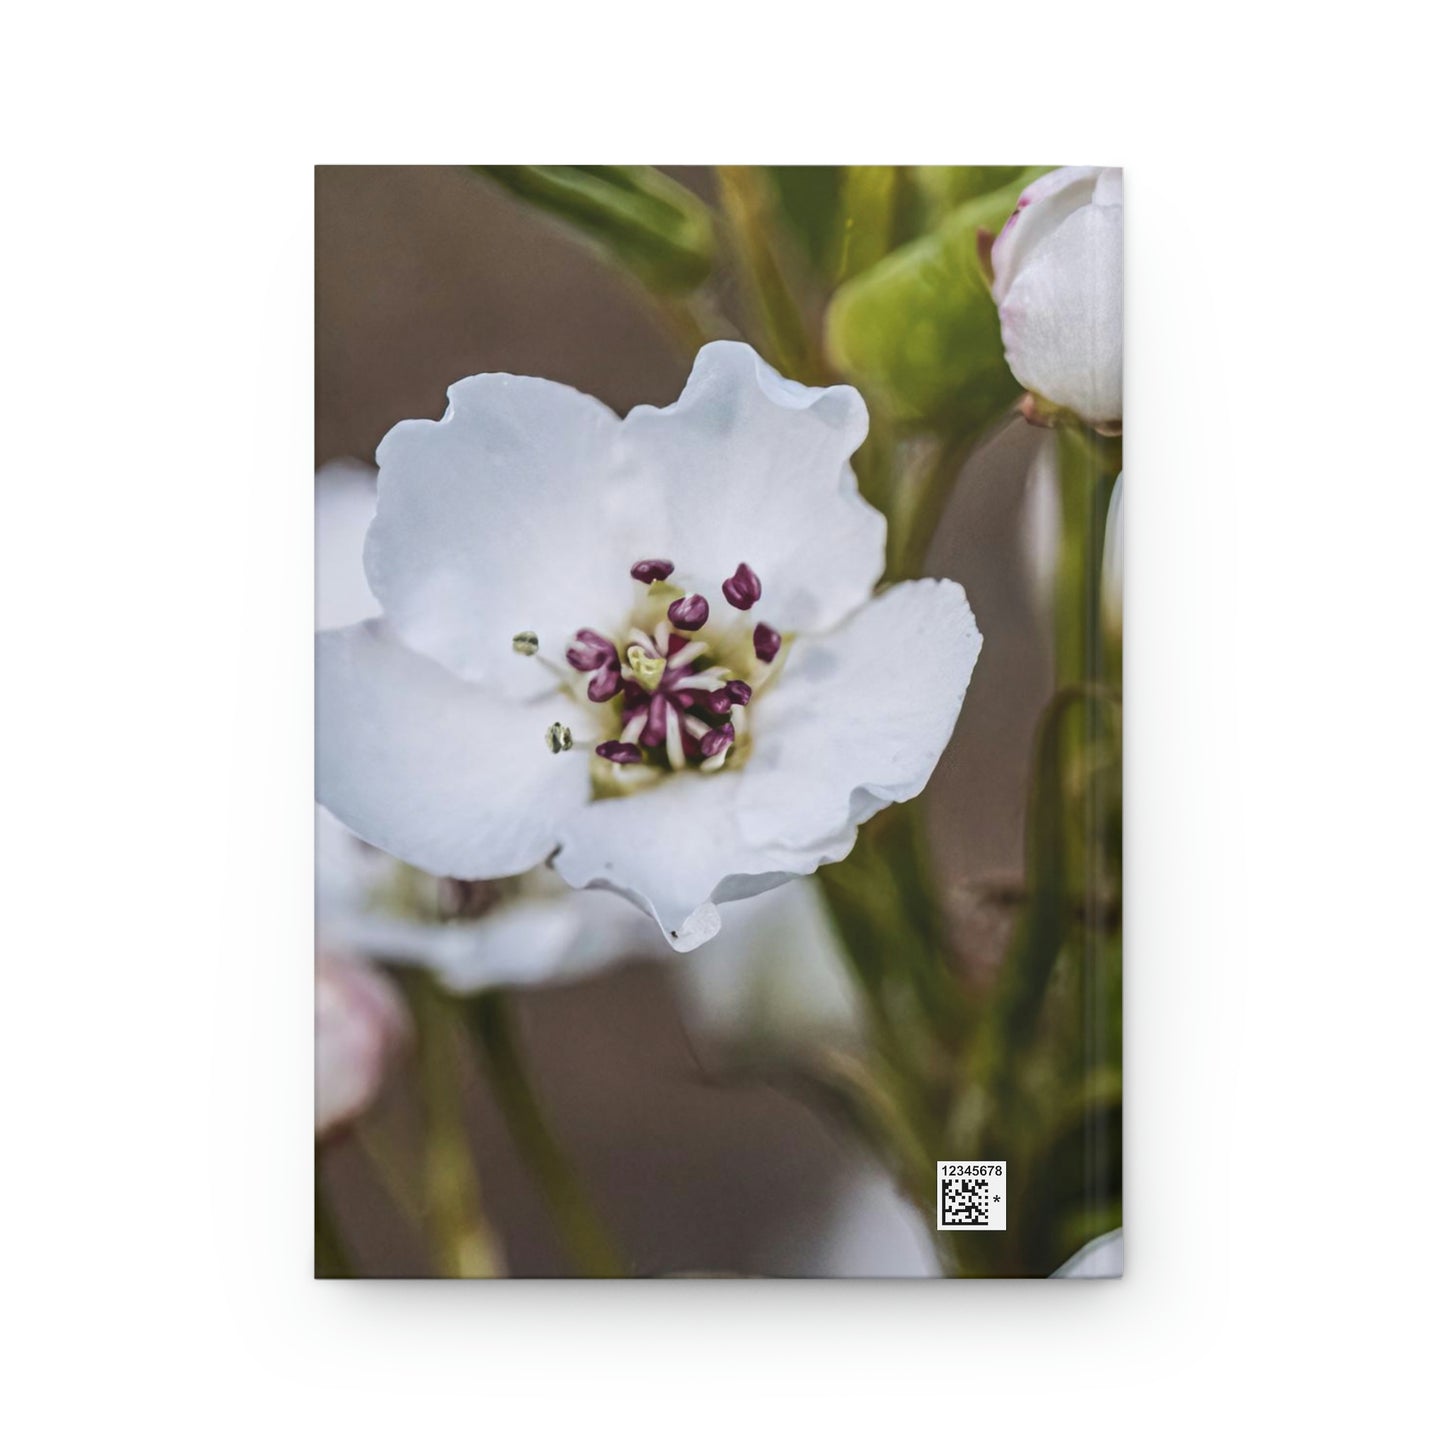 Spring Flowers Hardcover Journal Matte